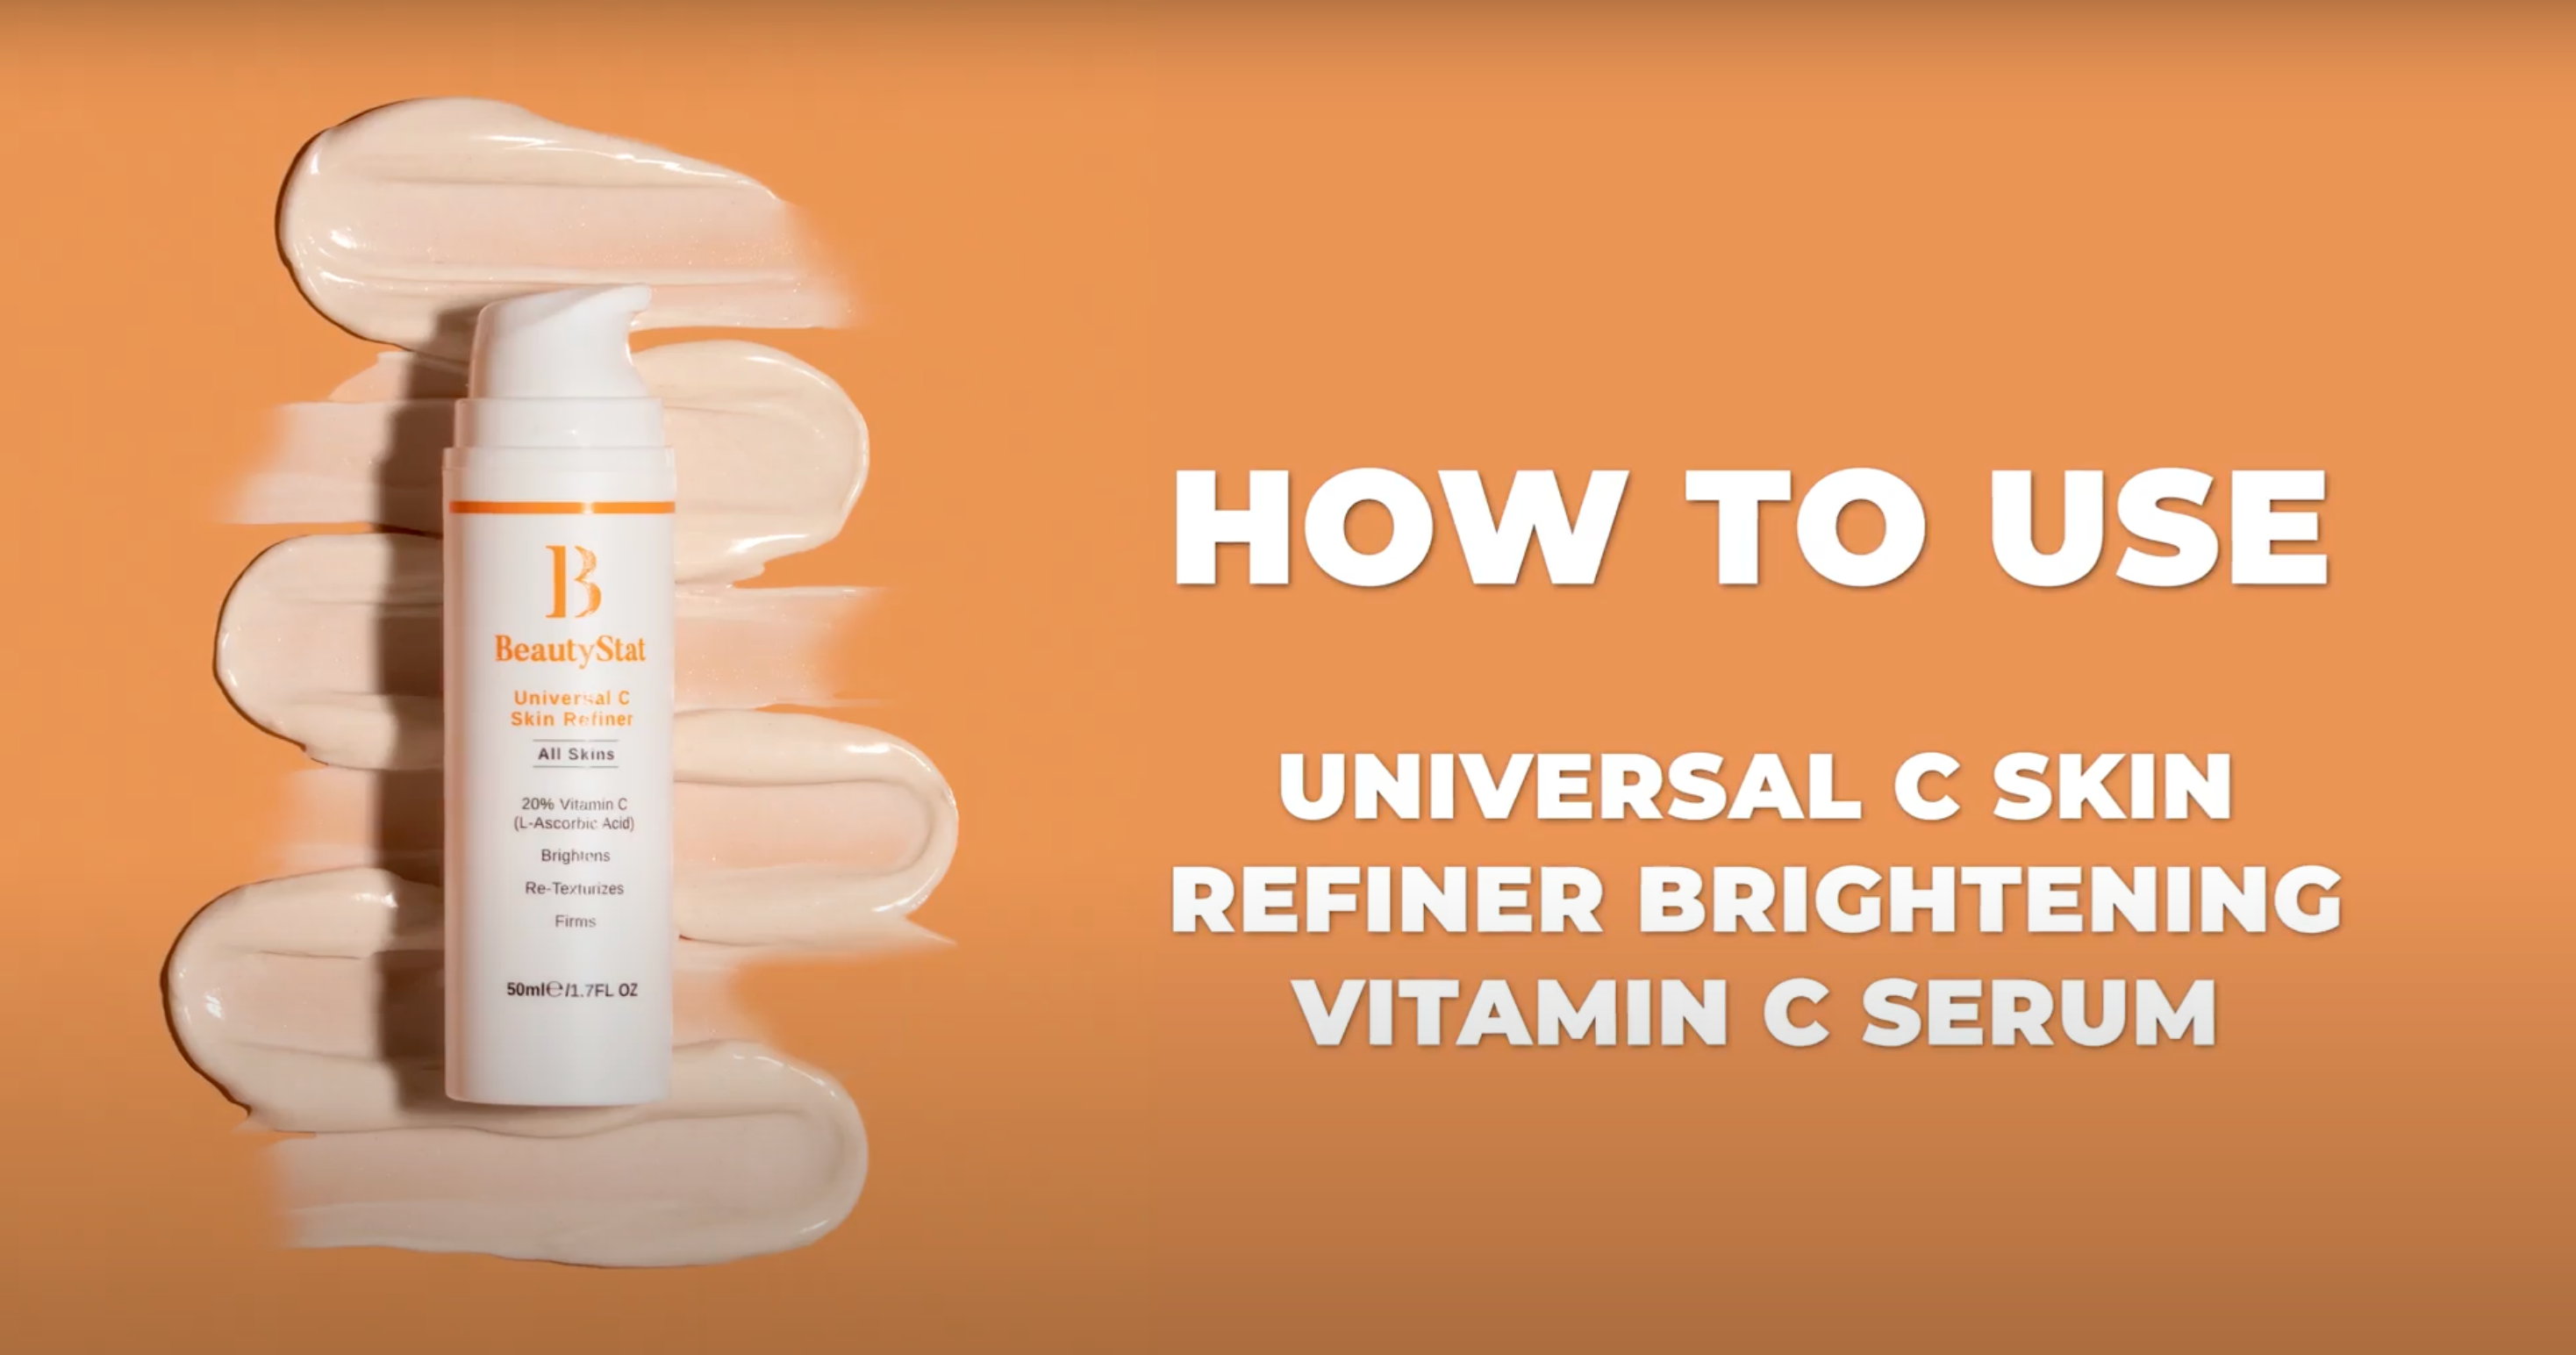 Load video: How to use Universal C Skin Refiner Brightening Vitamin C SerumVideo